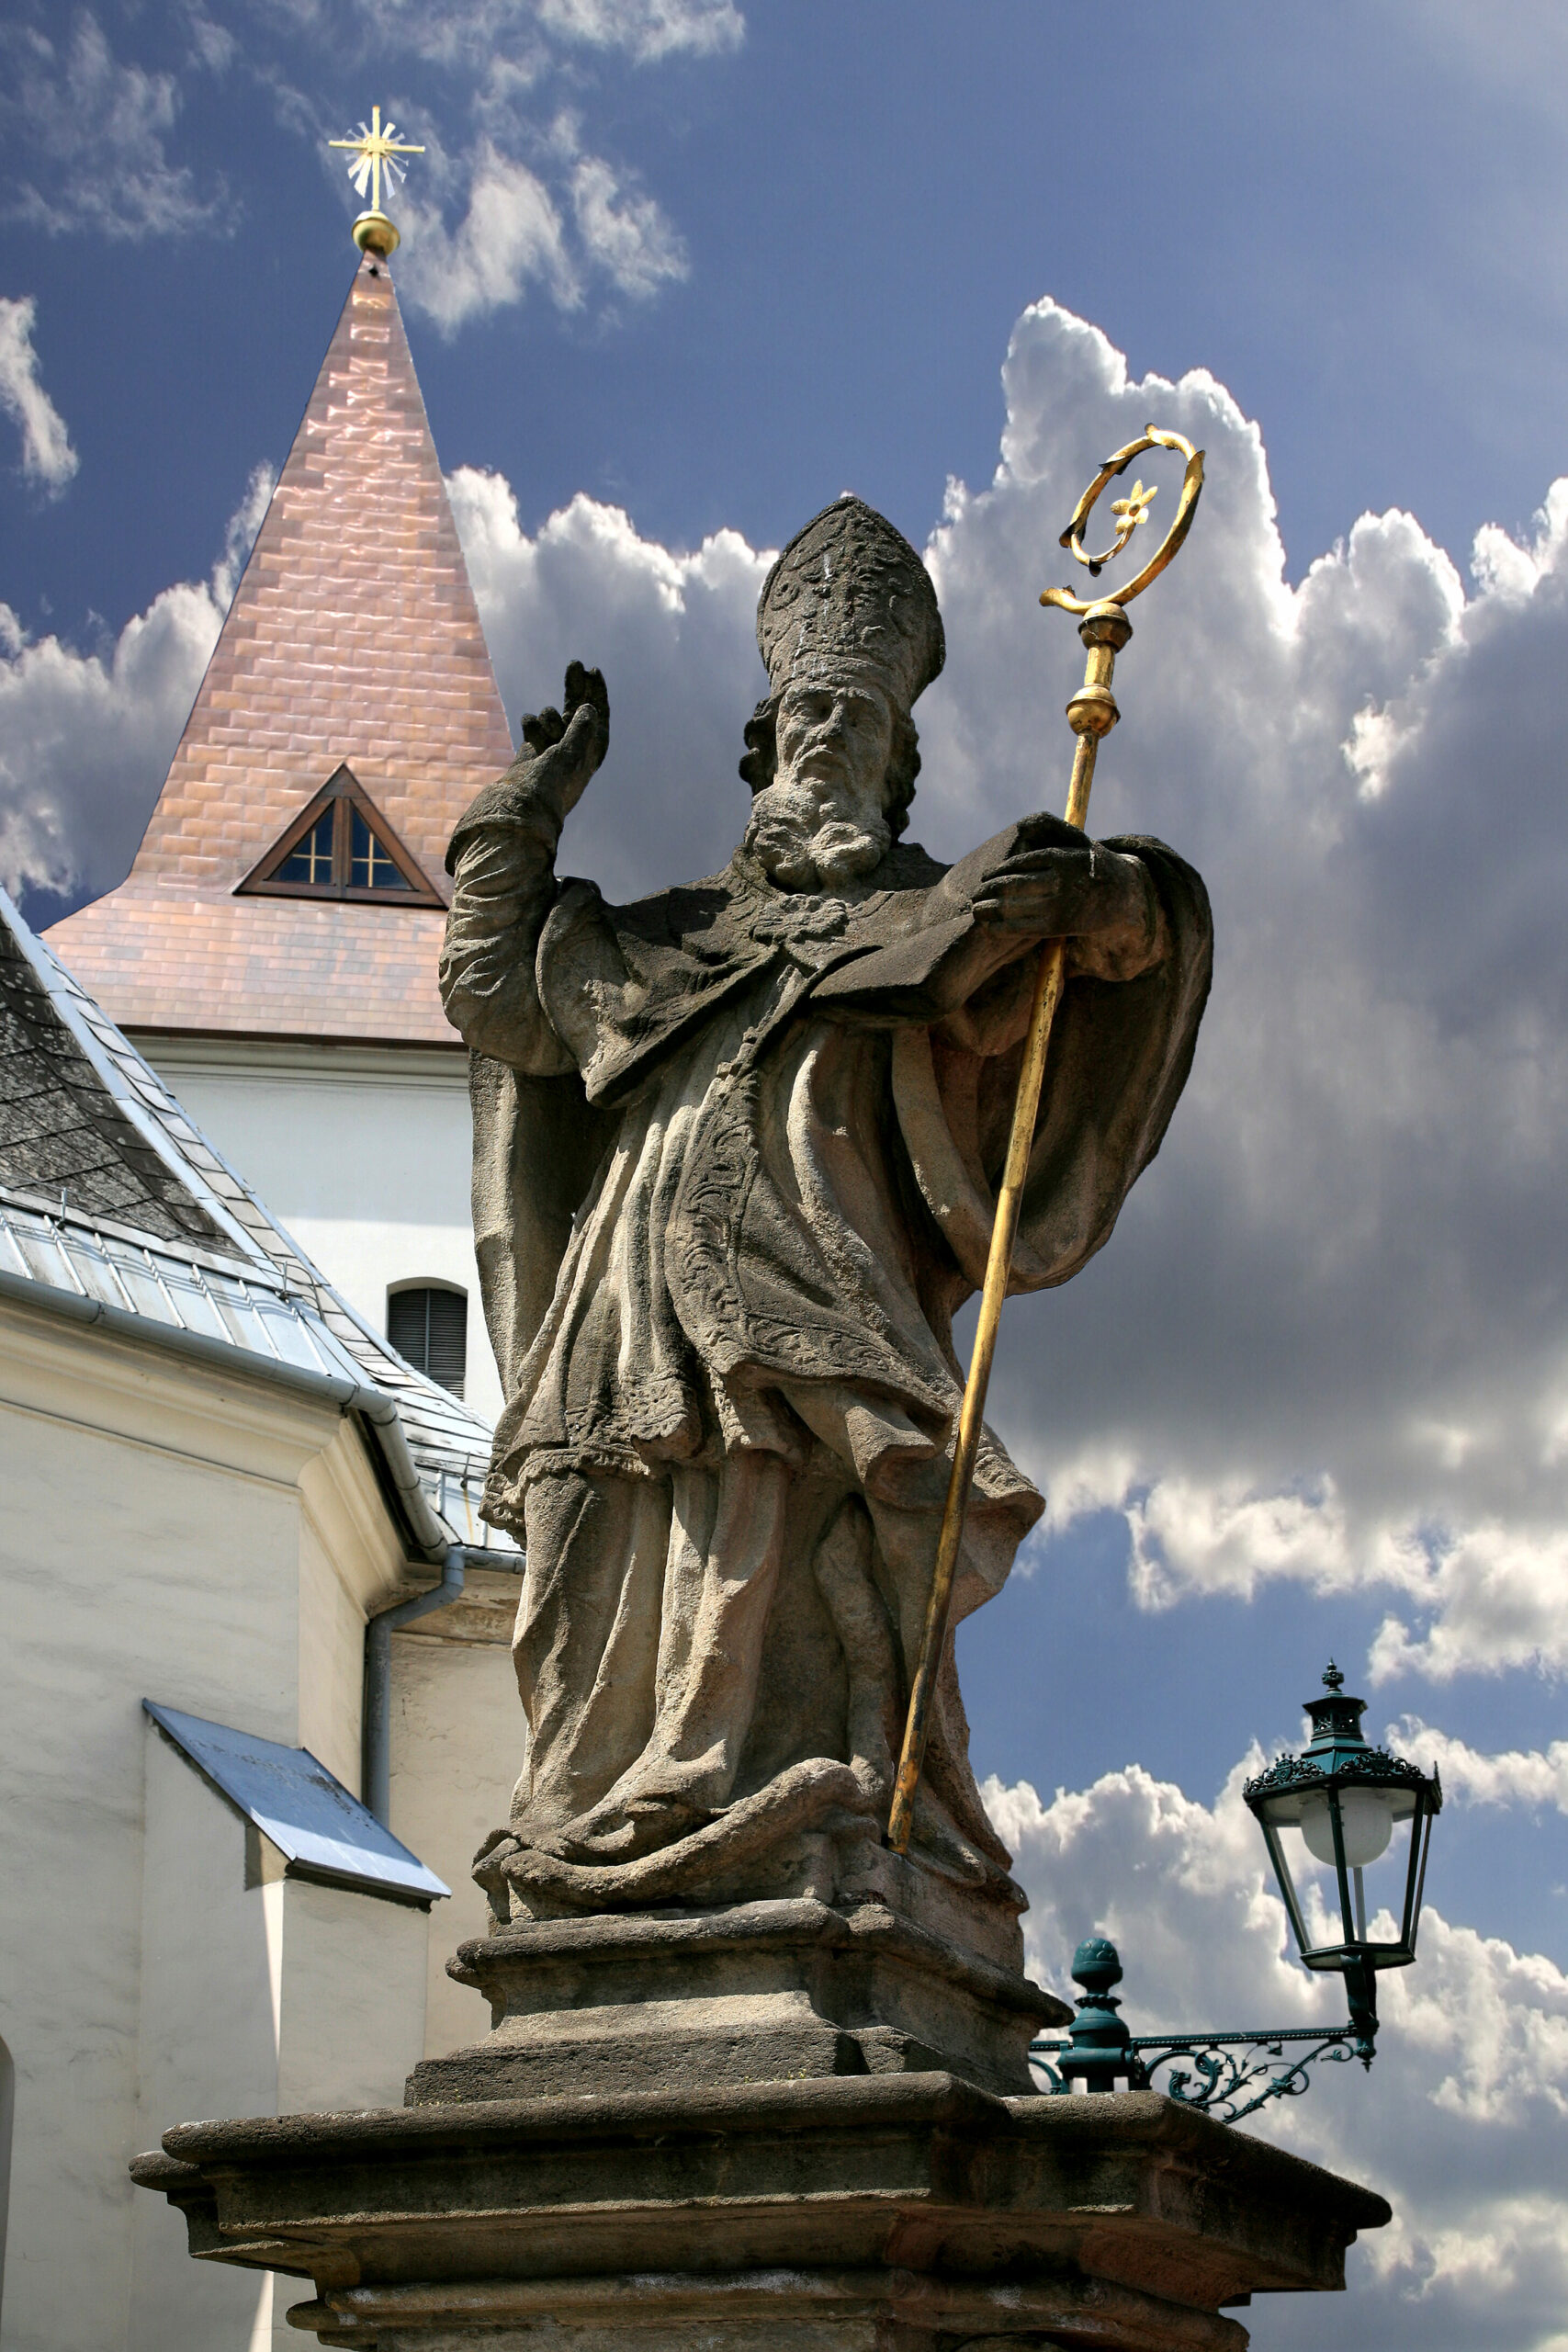 The Statue of St. Patrick in Karvina